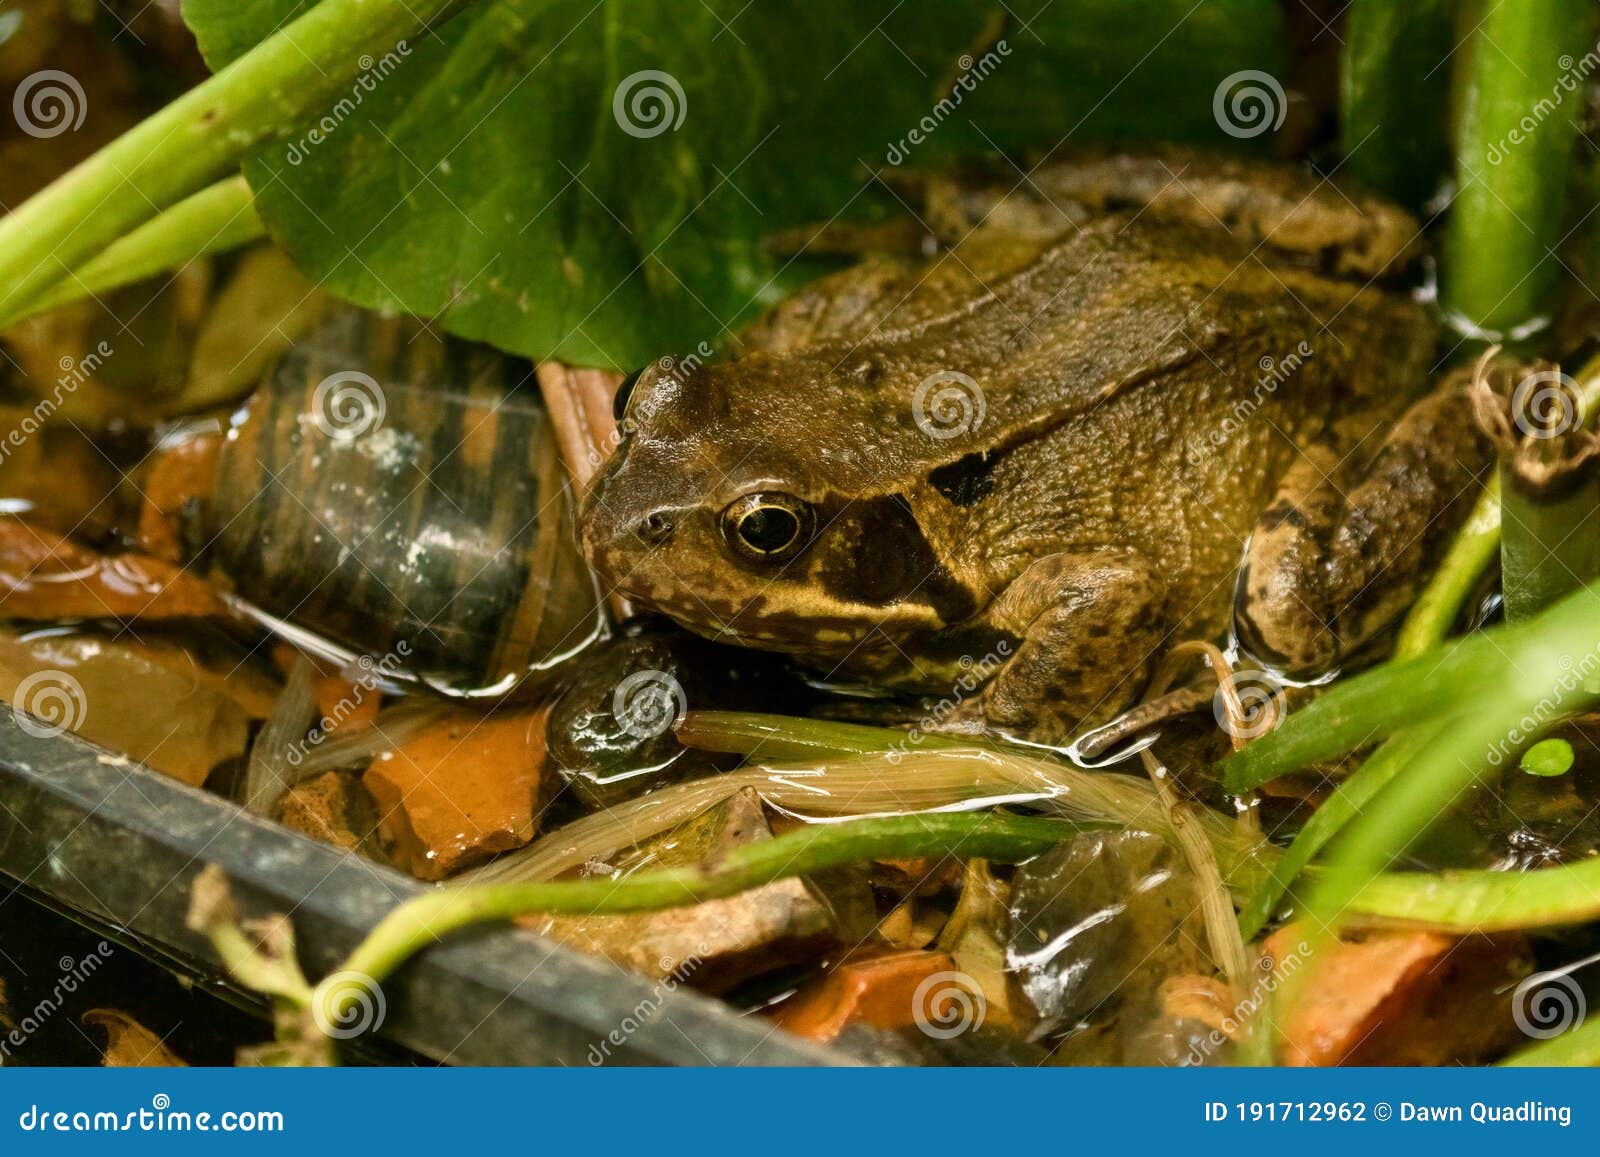 european frog, rana temporaria, real poser in my garden pond in the marsh marigolds